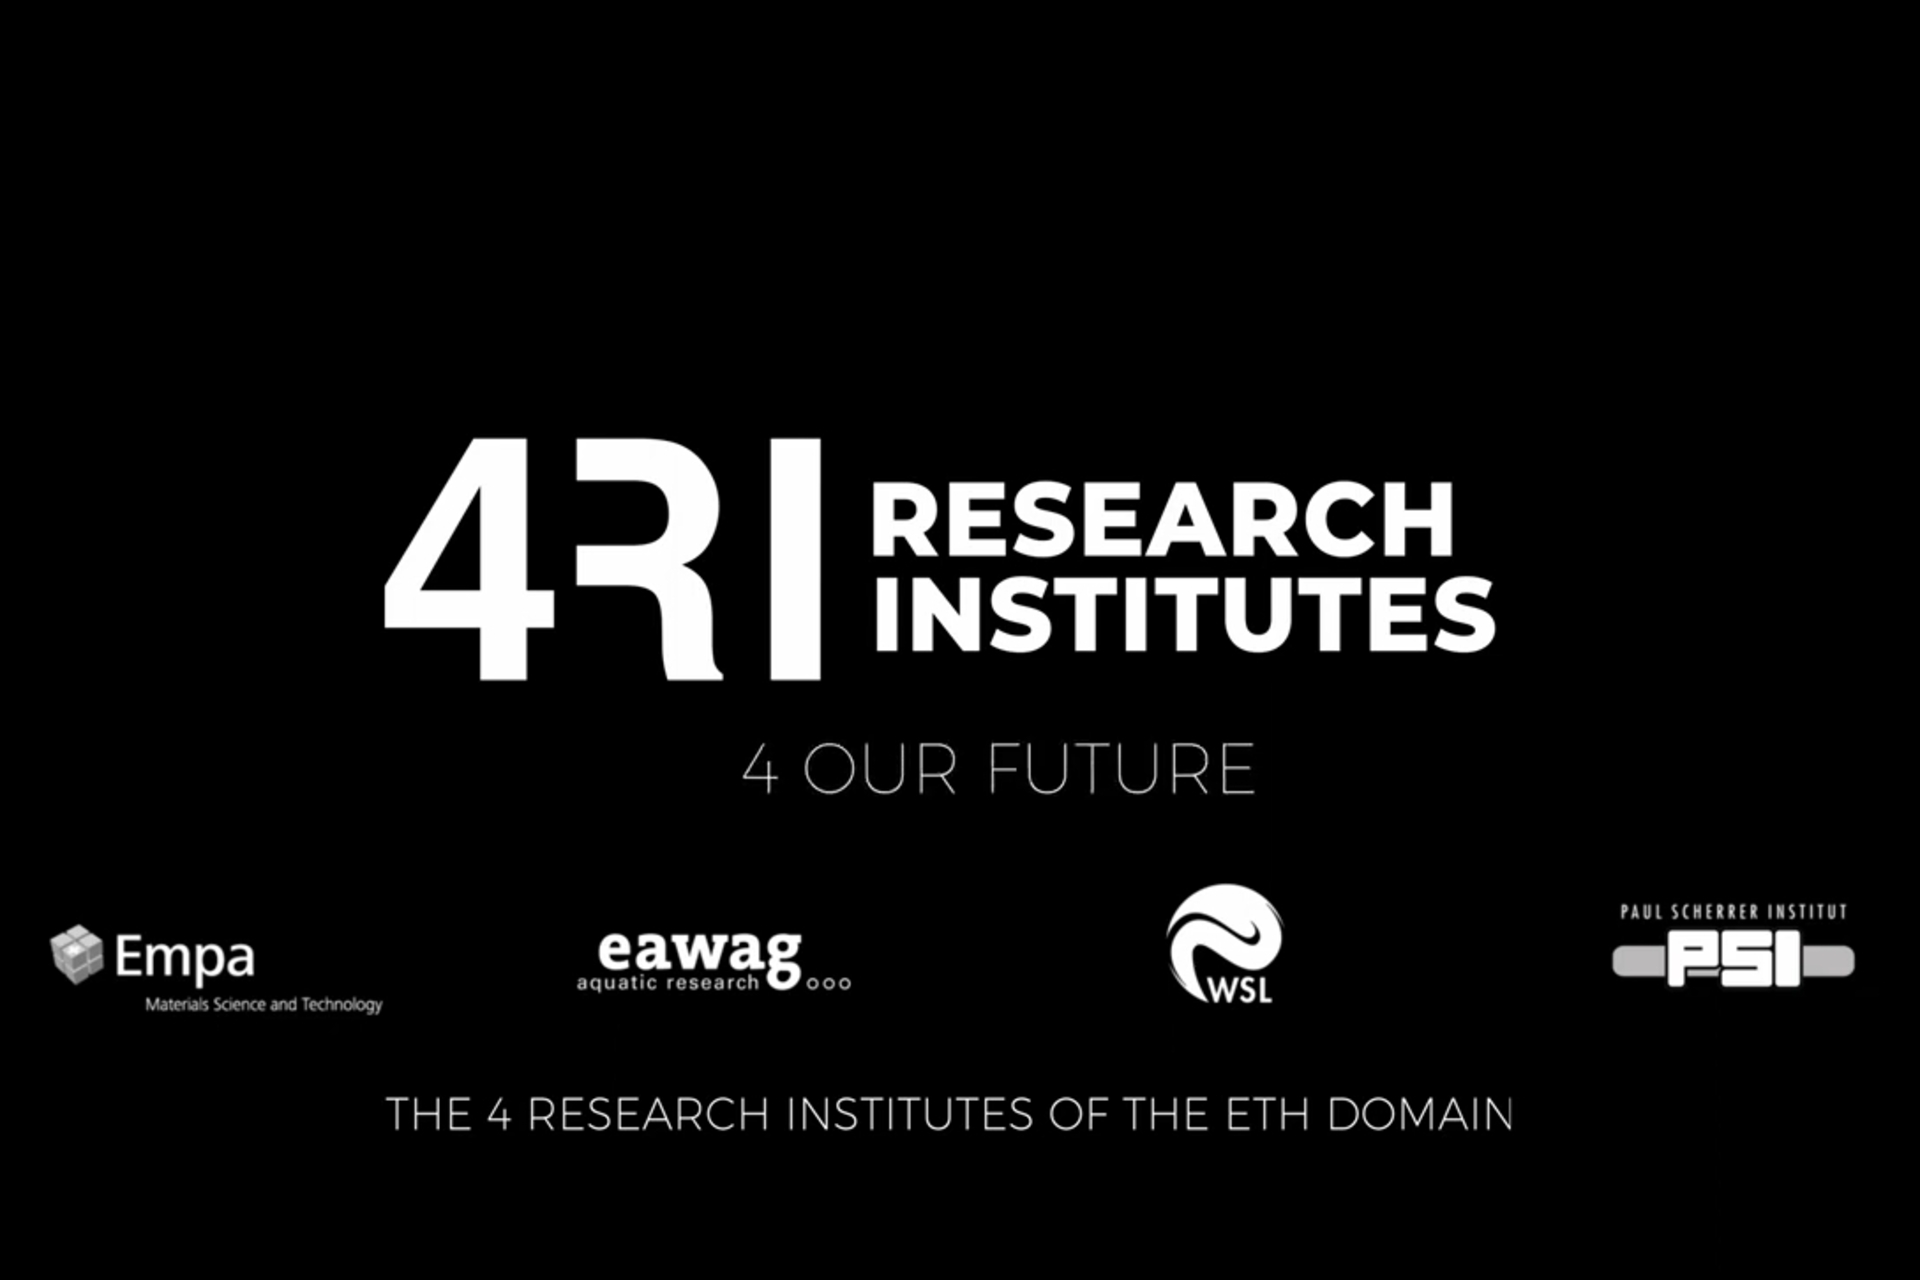 Centri svizzeri di ricerca: EMPA, EAWAG, WSL e PSI